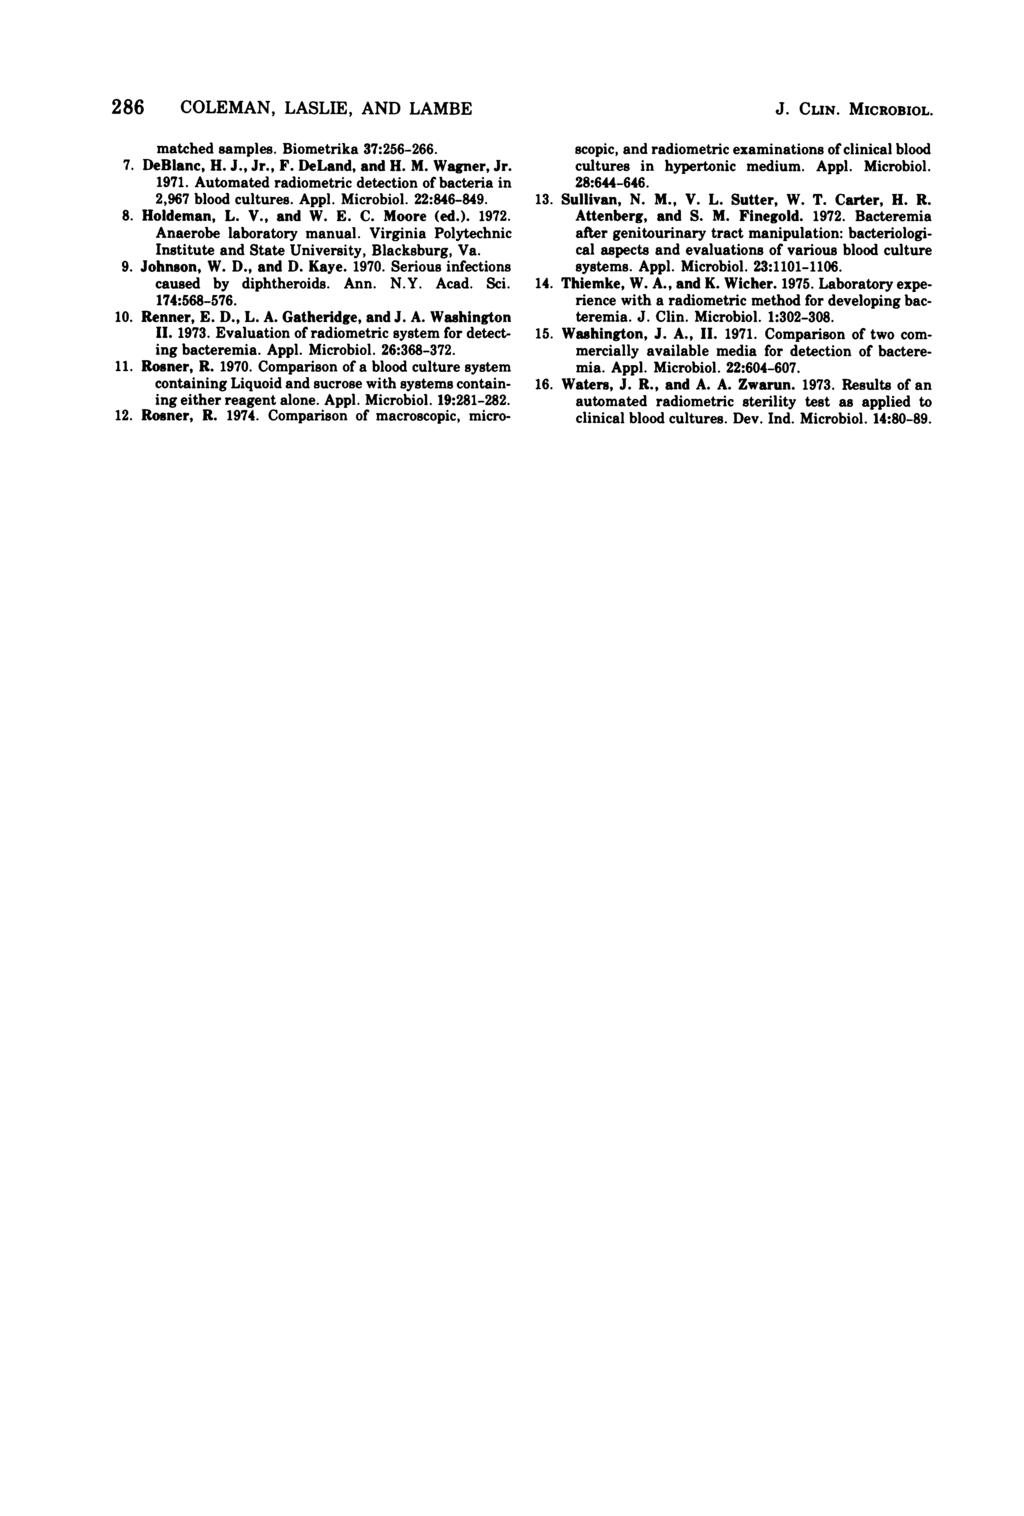 286 COLEMAN, LASLIE, AND LAMBE matched samples. Biometrika 37:256-266. 7. DeBlanc, H. J., Jr., F. DeLand, and H. M. Wagner, Jr. 1971.